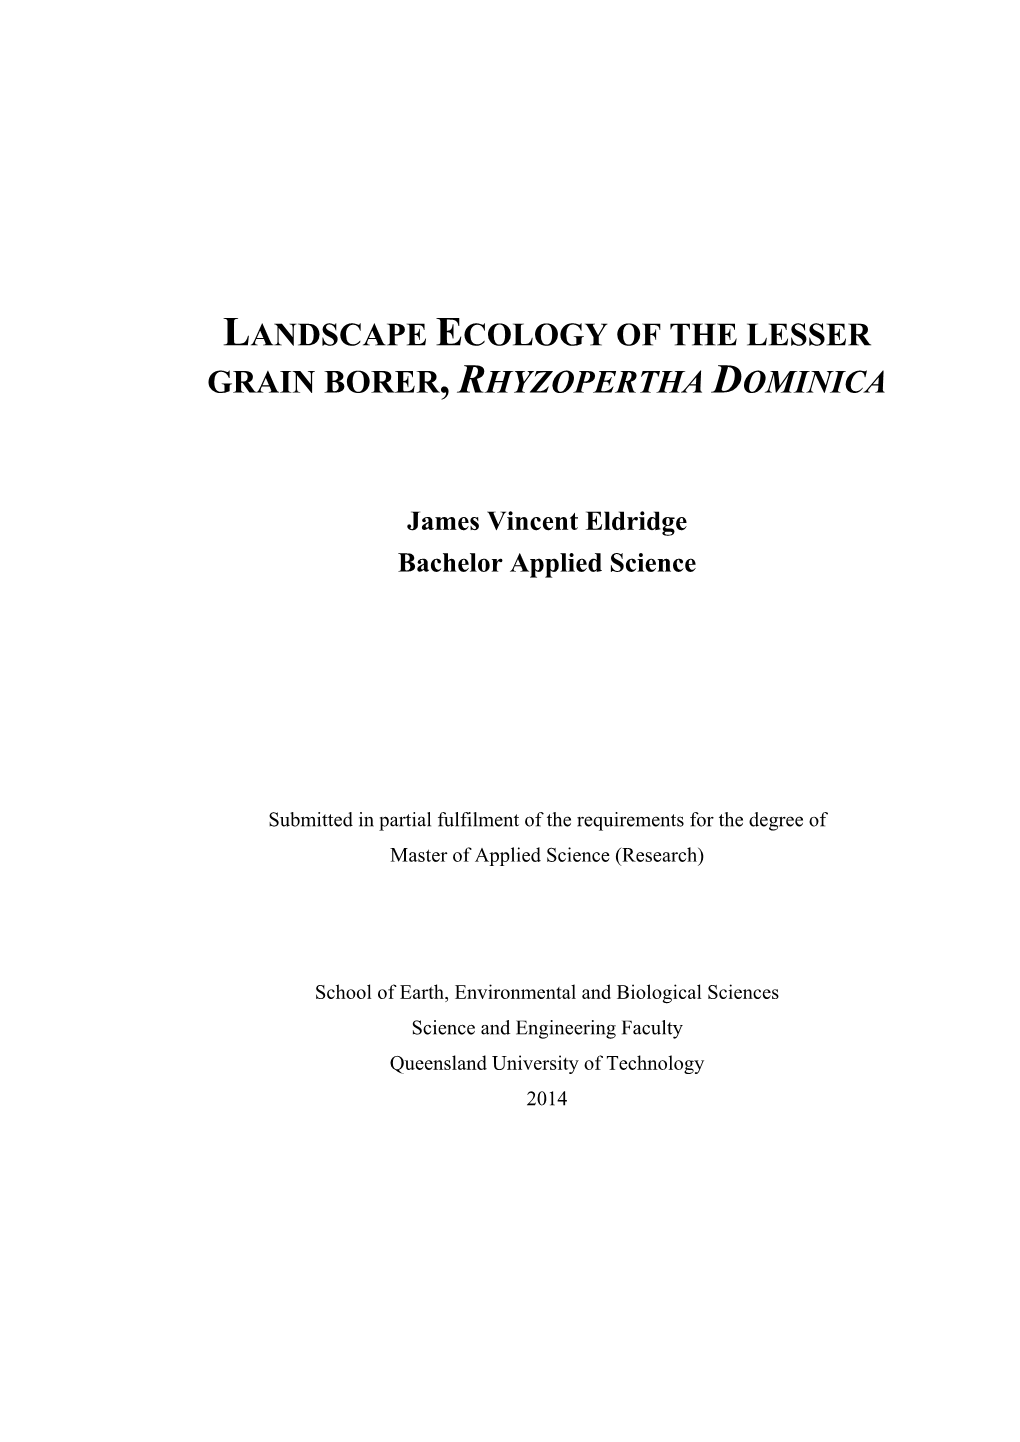 Landscape Ecology of the Lesser Grain Borer, Rhyzopertha Dominica